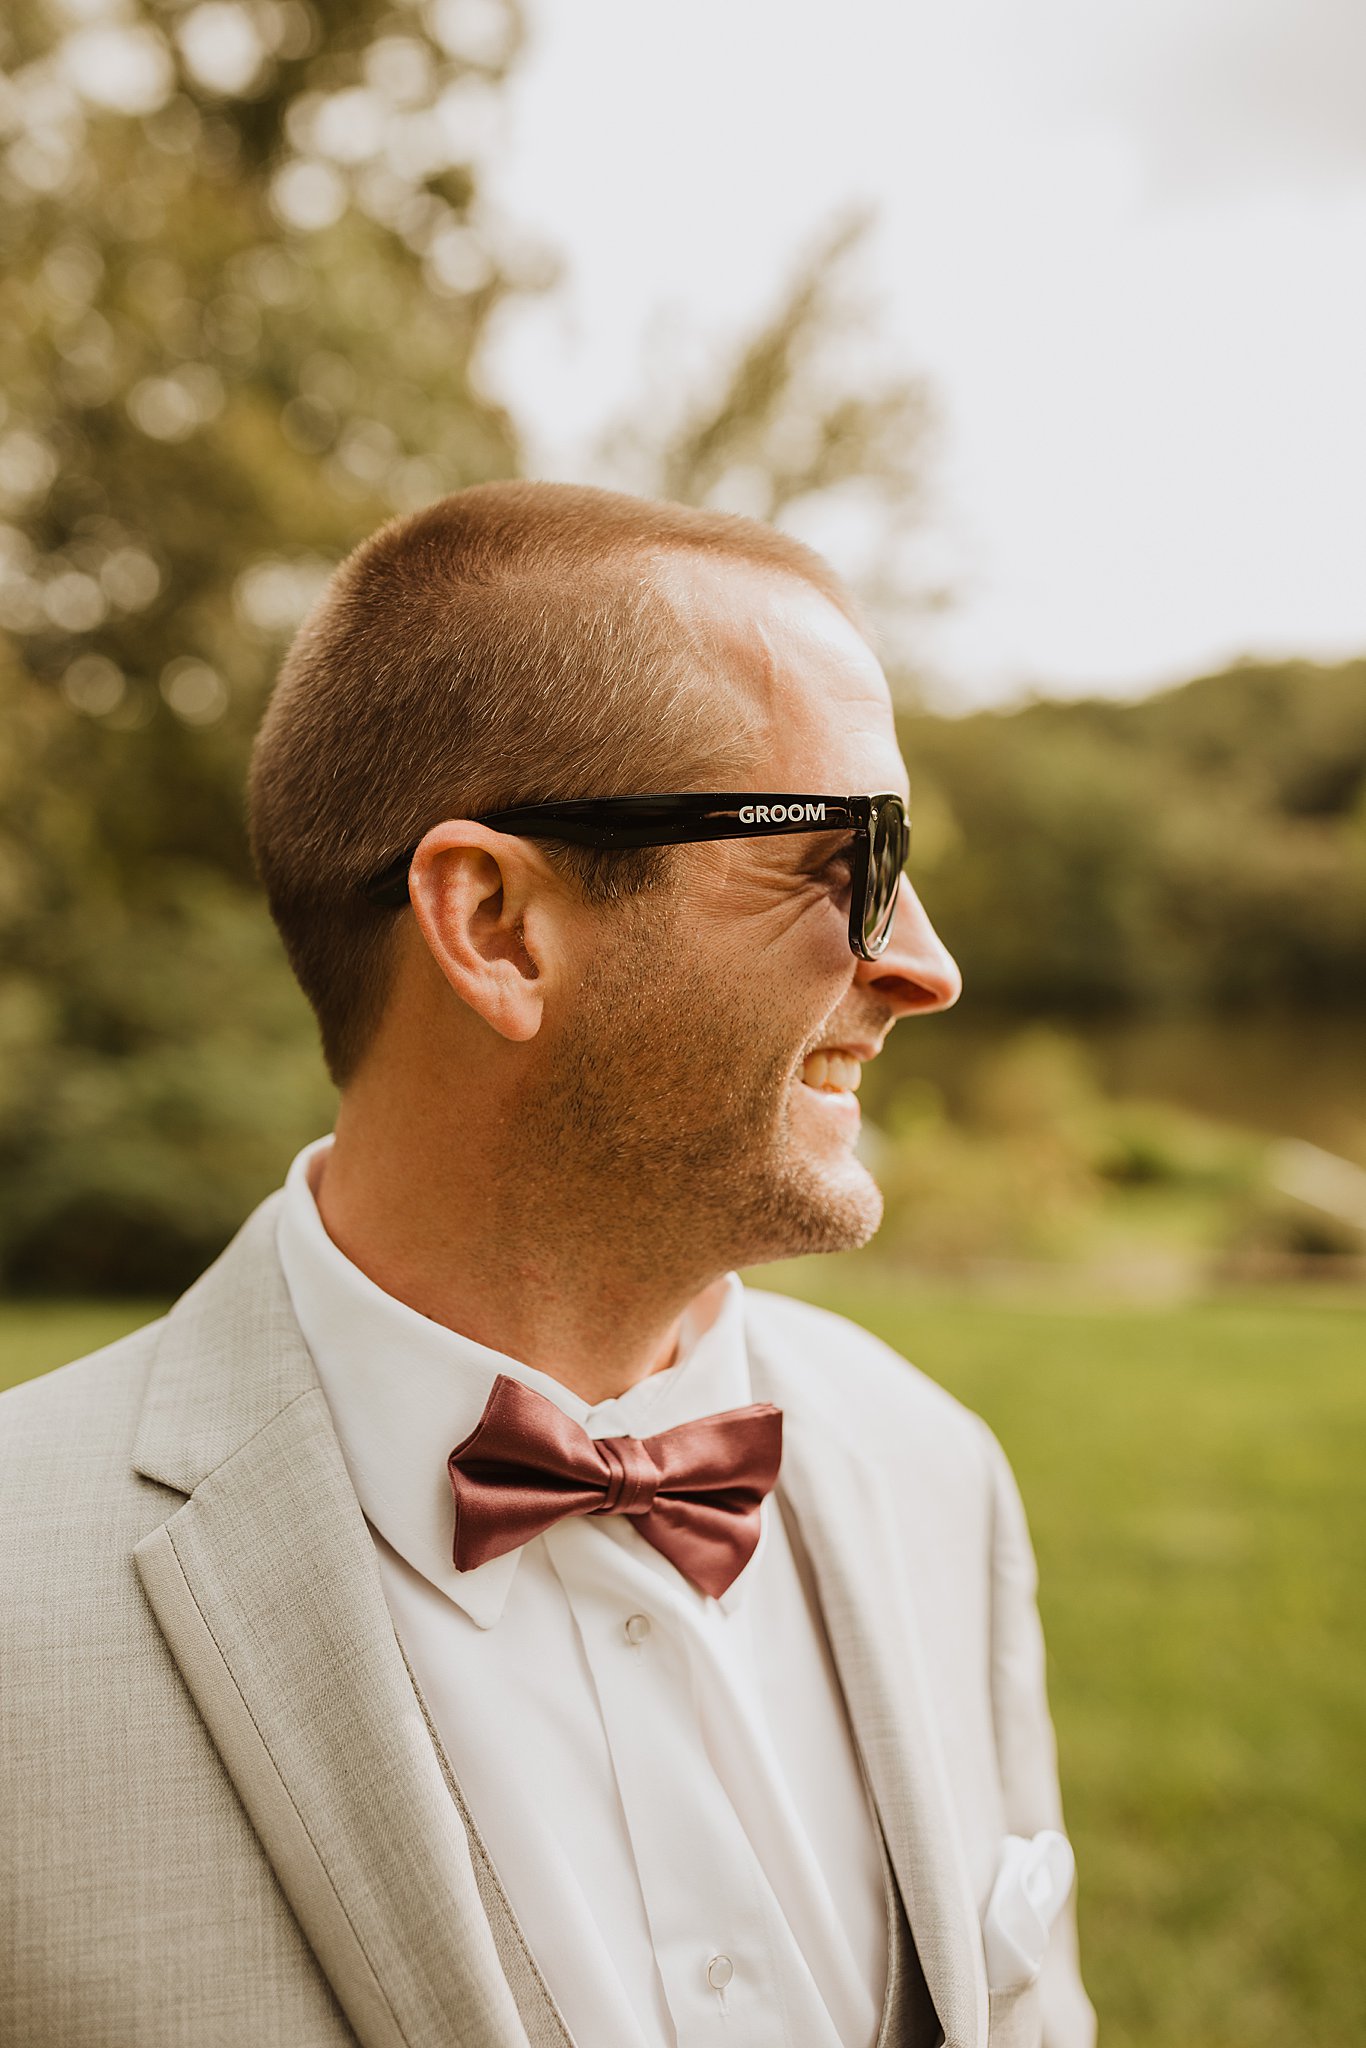 Personalized groomsmen sunglasses